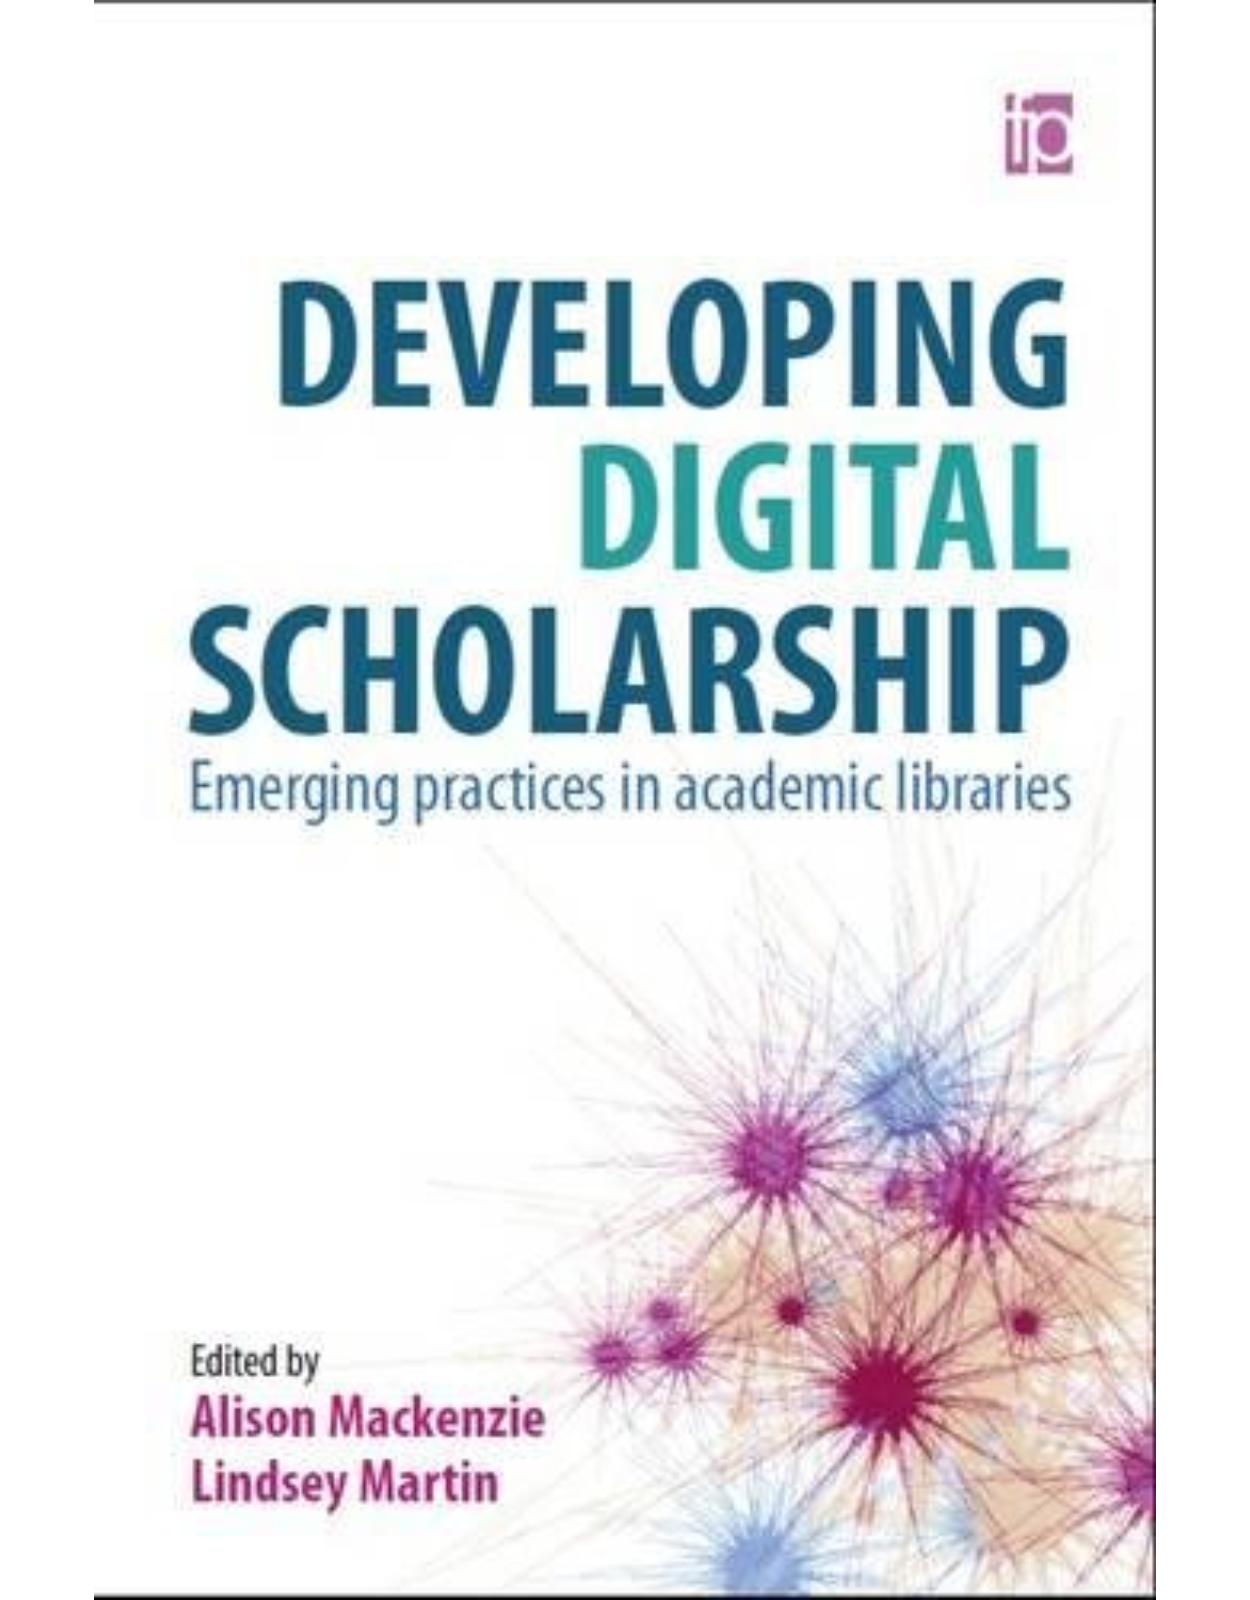 Developing Digital Scholarship: Emerging practices in academic libraries